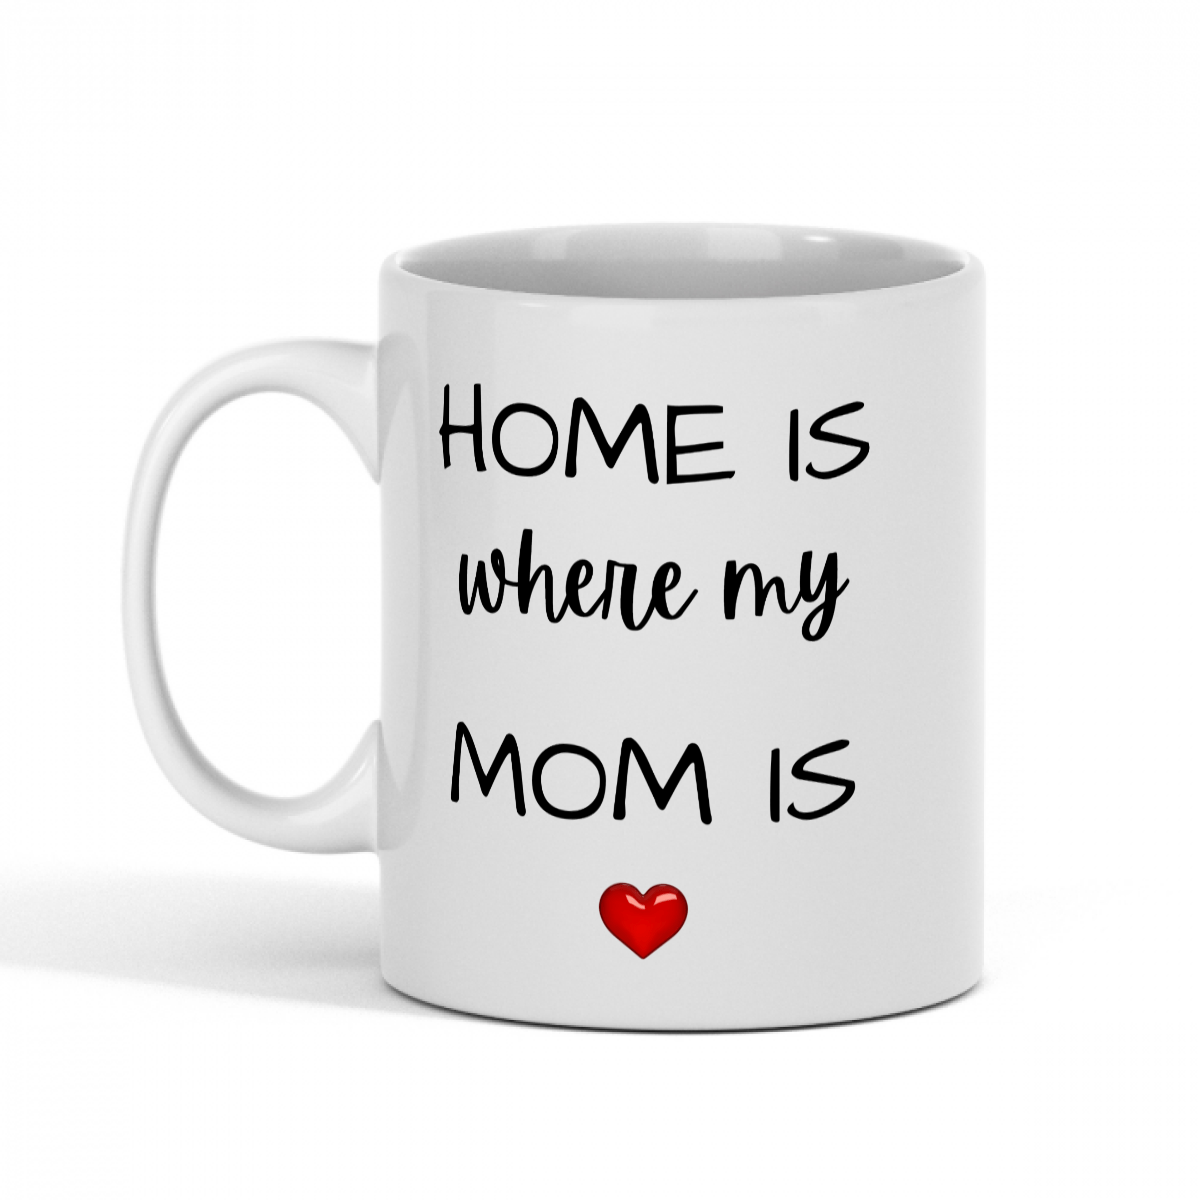 Home is where my Mom is - 11oz mug